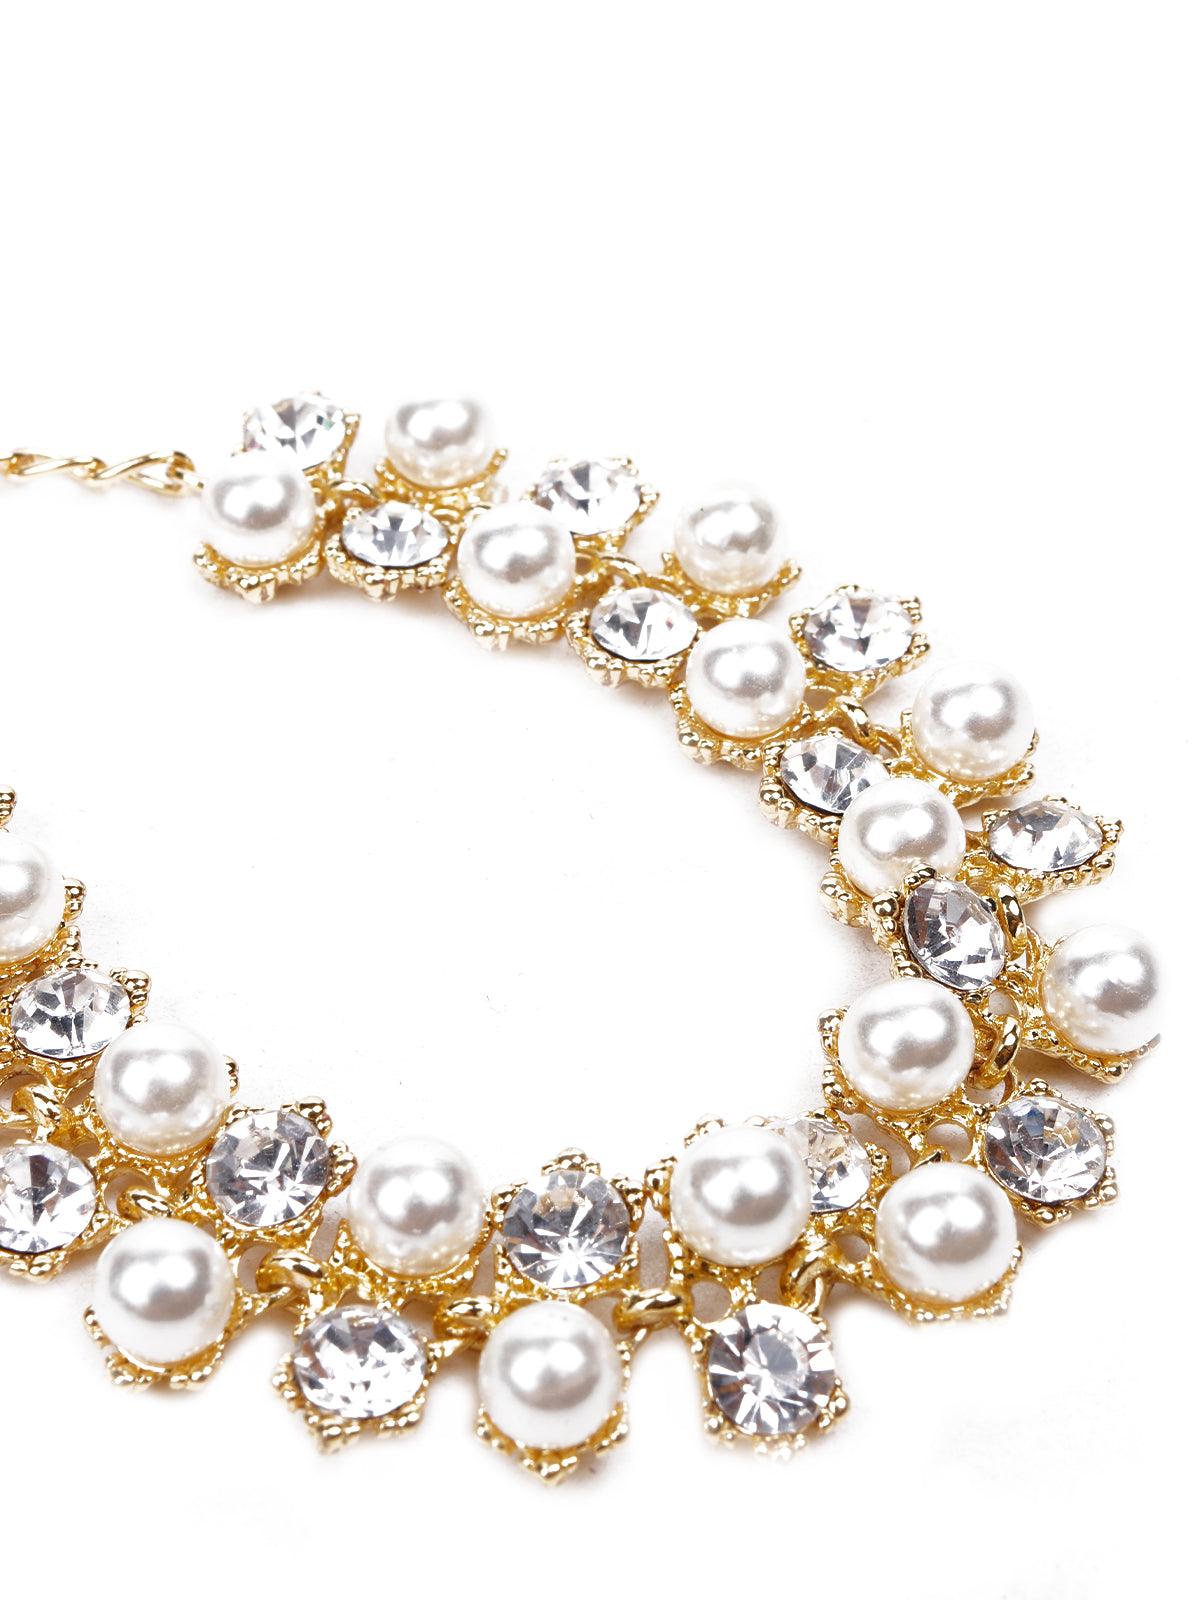 Women's Gold Bracelet Embellished With Crystals And Pearls - Odette